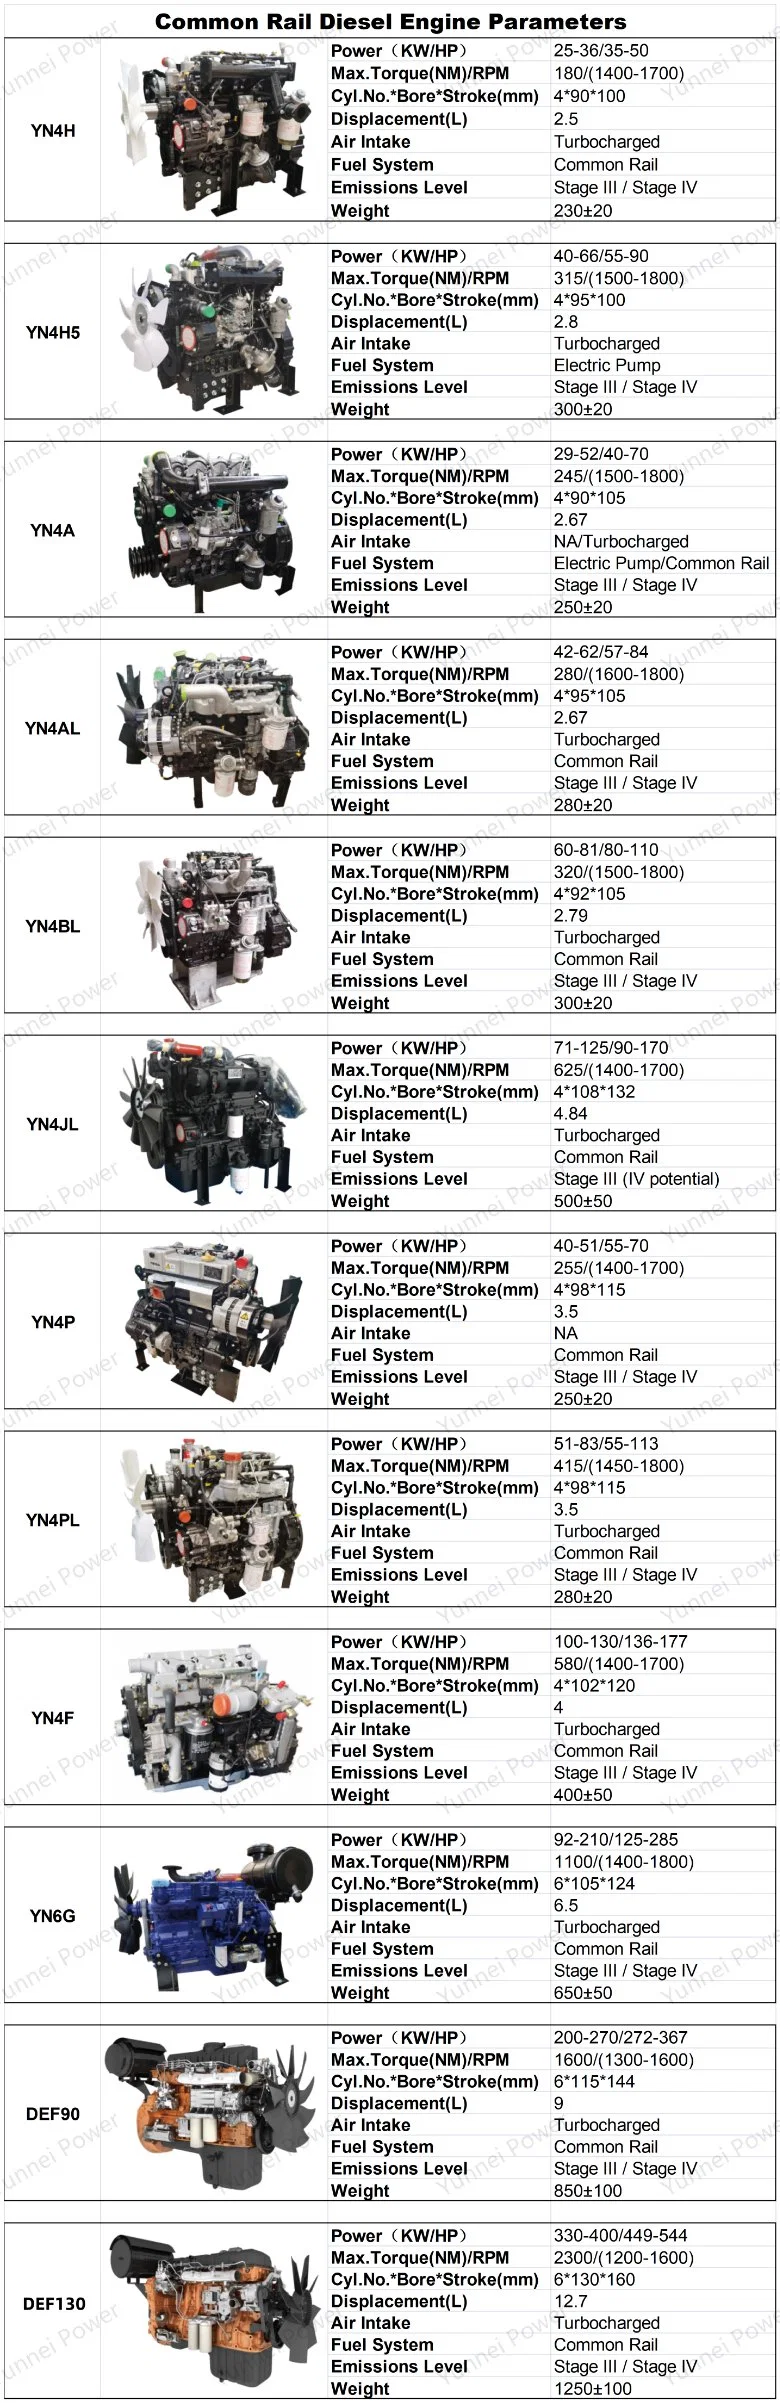 Yunnei Power Machinery Diesel Engine for Diesel Generator Set/Fire Fighting Pump/Water Pump/Forklift/Light Truck/Wheel Loader/Tractor